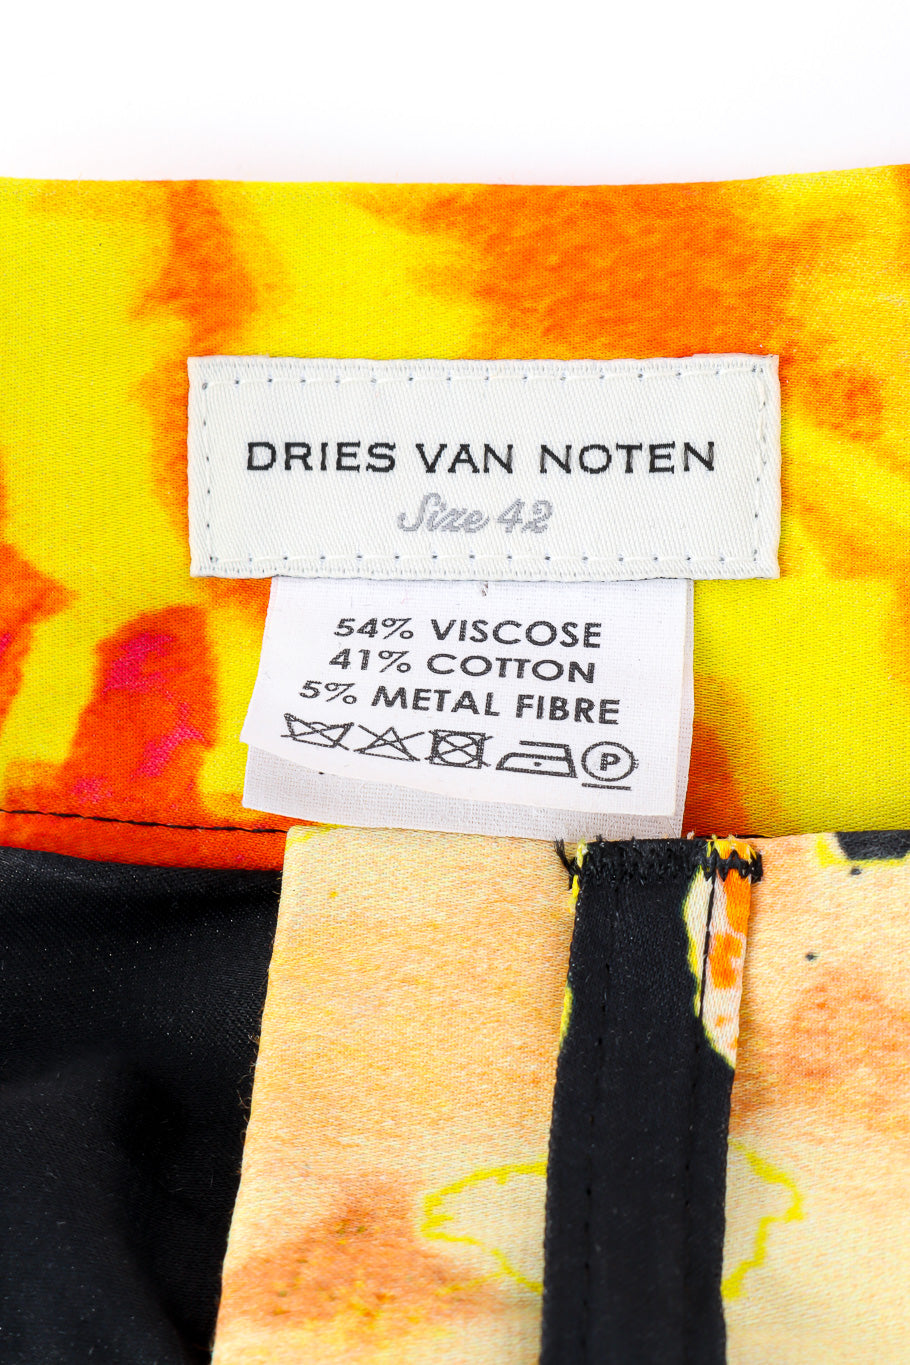 Dries Van Noten floral wide leg pant designer label @recessla